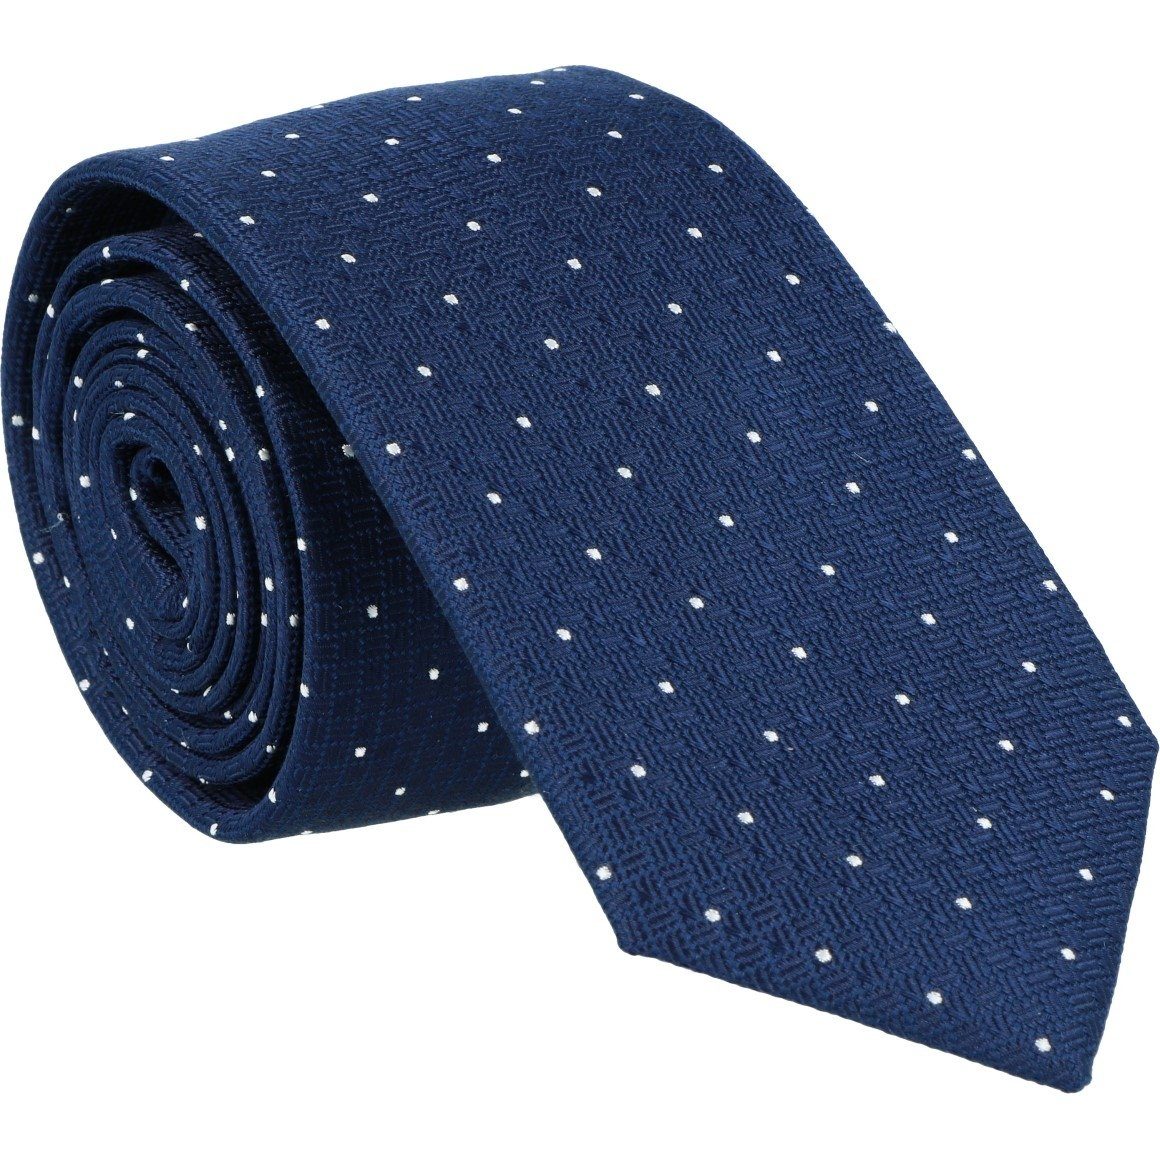 WILLEN Krawatte Willen blau Krawatte